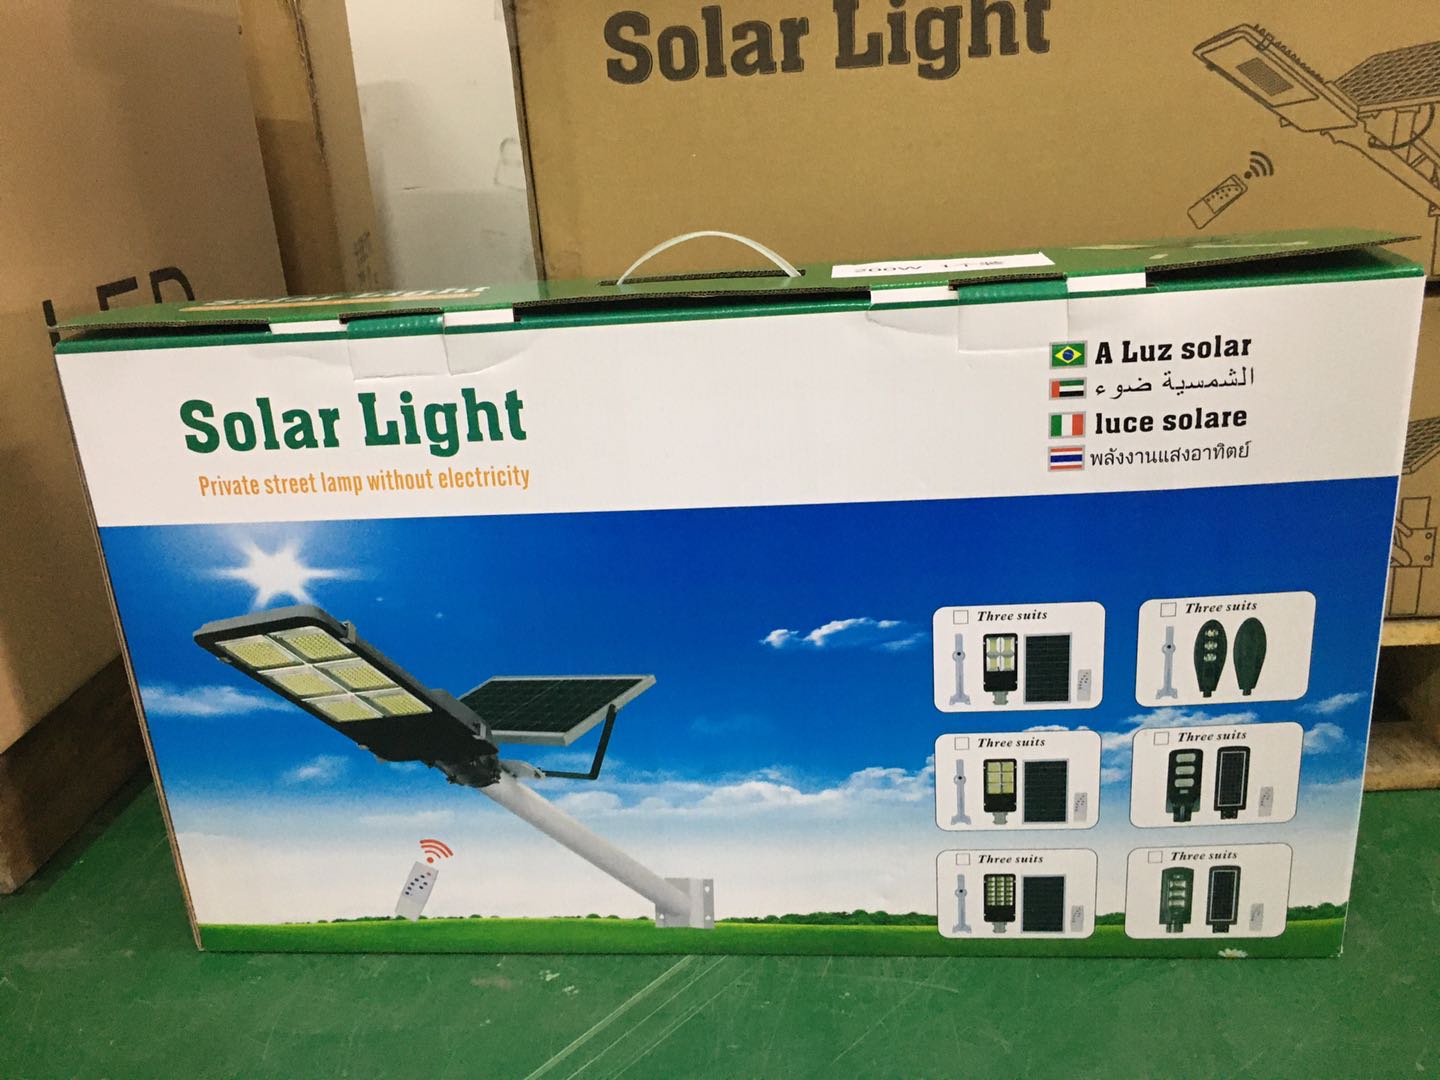 Liking Solar BC Series Solar Street Lights BC300W Integrated led lamp Aluminum Alloy Case